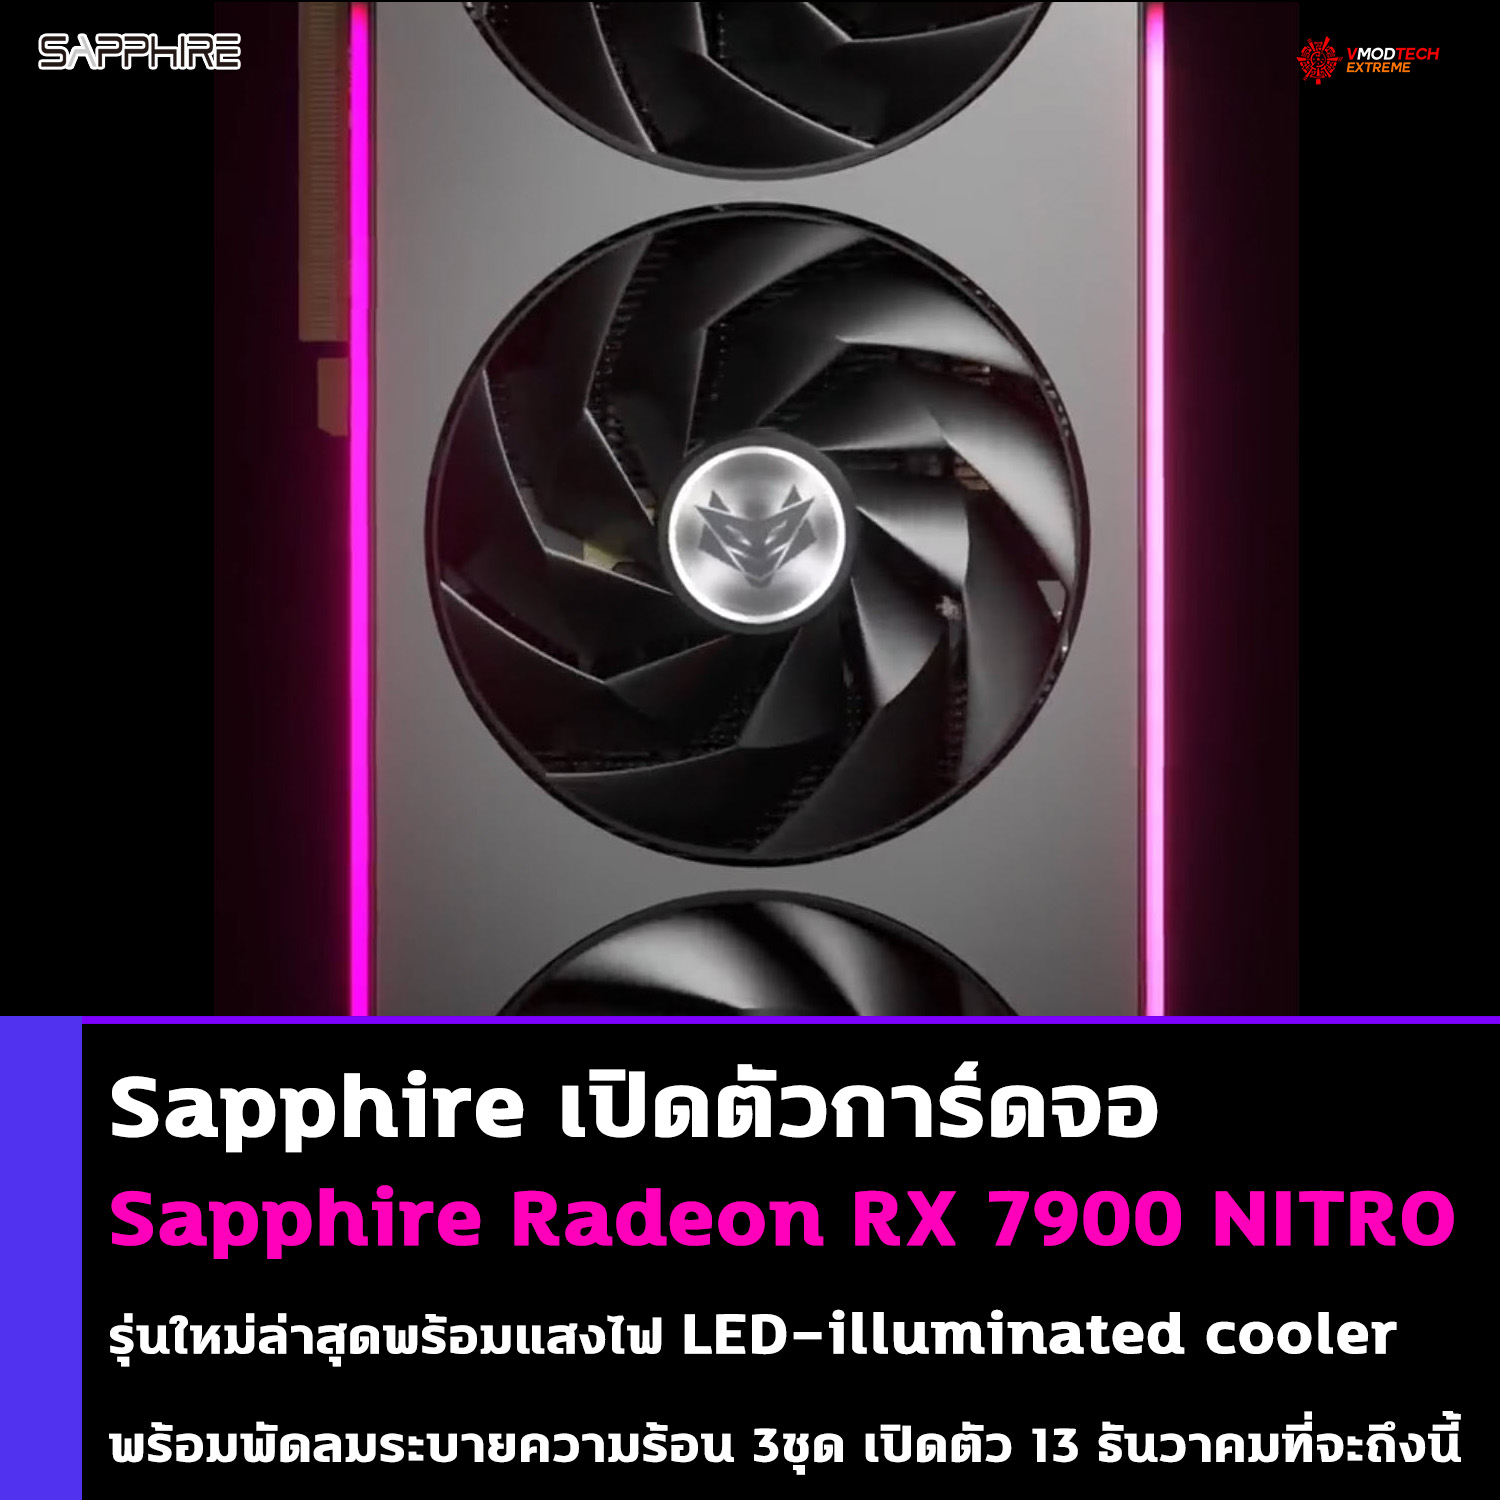 sapphire radeon rx 7900 nitro series Sapphire เปิดตัวการ์ดจอ Sapphire Radeon RX 7900 NITRO series รุ่นใหม่ล่าสุดพร้อมแสงไฟ LED illuminated cooler ดีไซน์ใหม่ให้อย่างสวยงาม